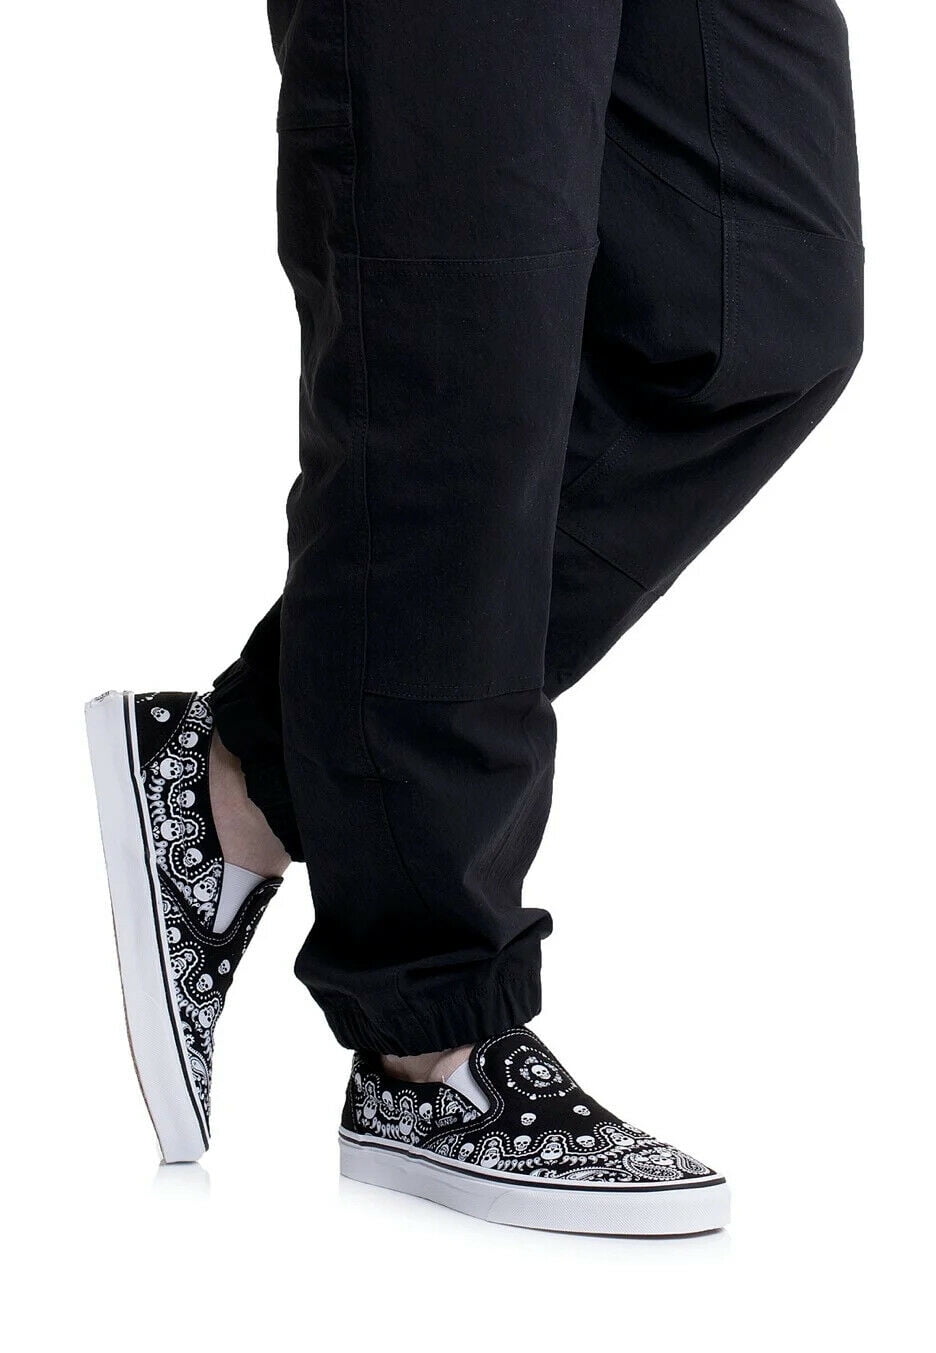 sej indbildskhed ekstremt Vans Classic Slip On Bandana Black/True White Men's Skate Shoes Size 9 -  Walmart.com